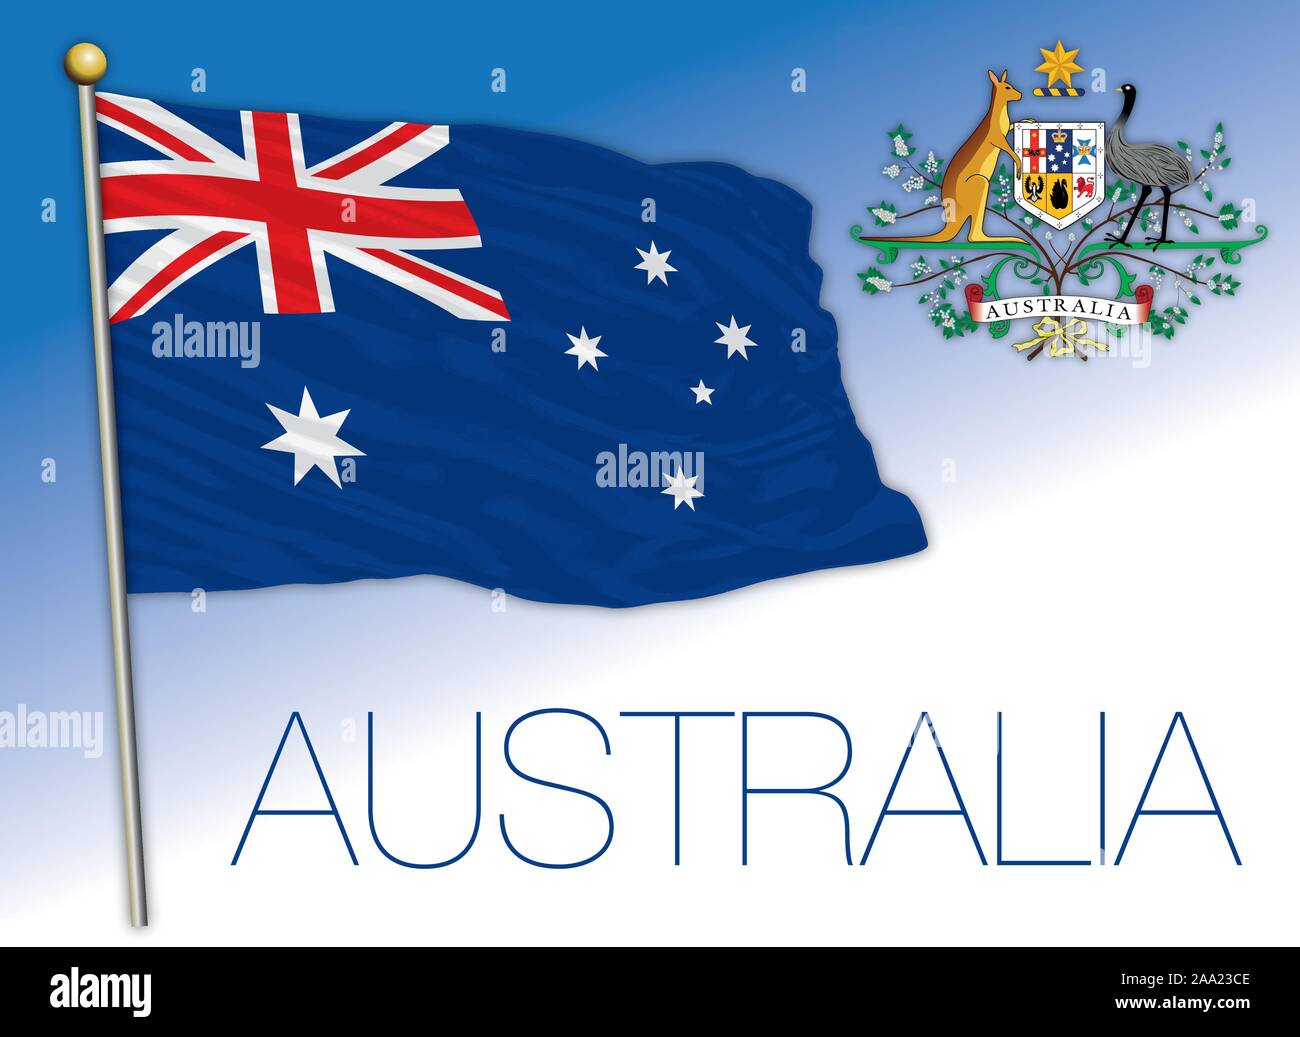 Australien offizielle nationale Flagge und Wappen, Vector Illustration Stock Vektor